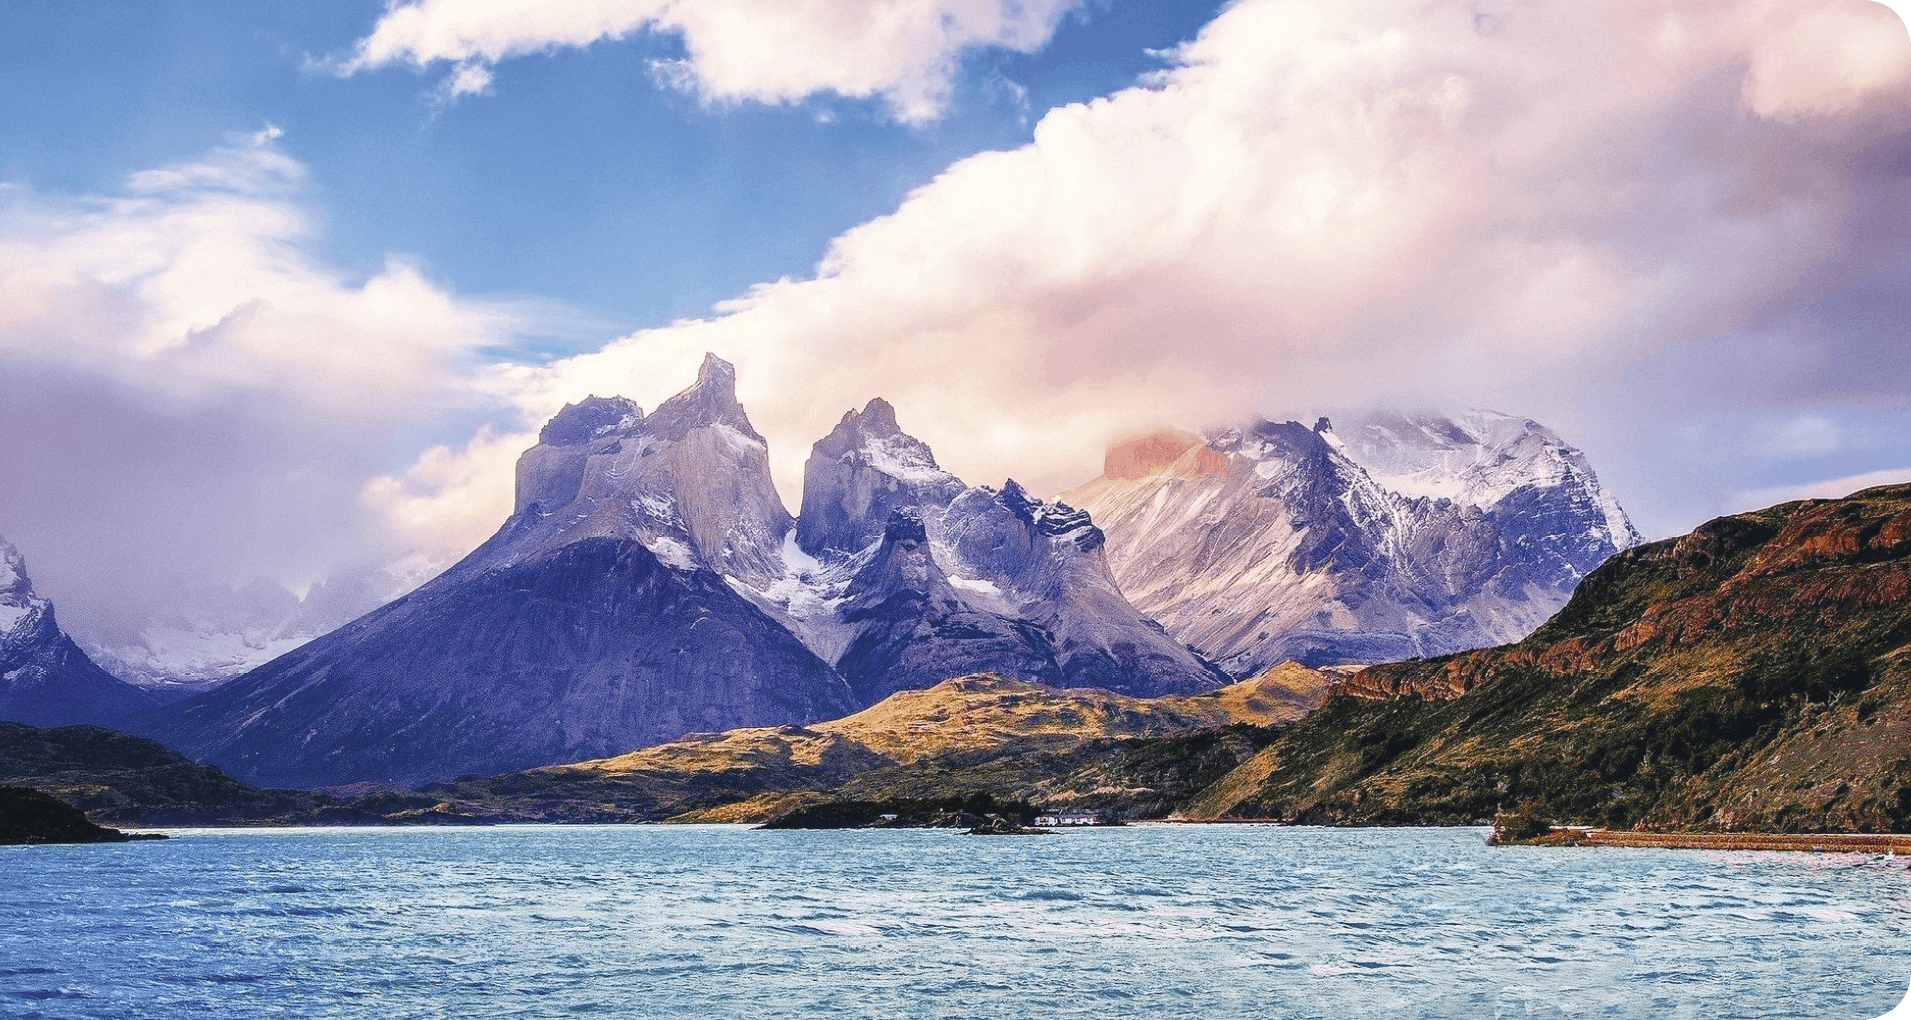 Parque nacional Torres del Paine, visitchile.com, 2019